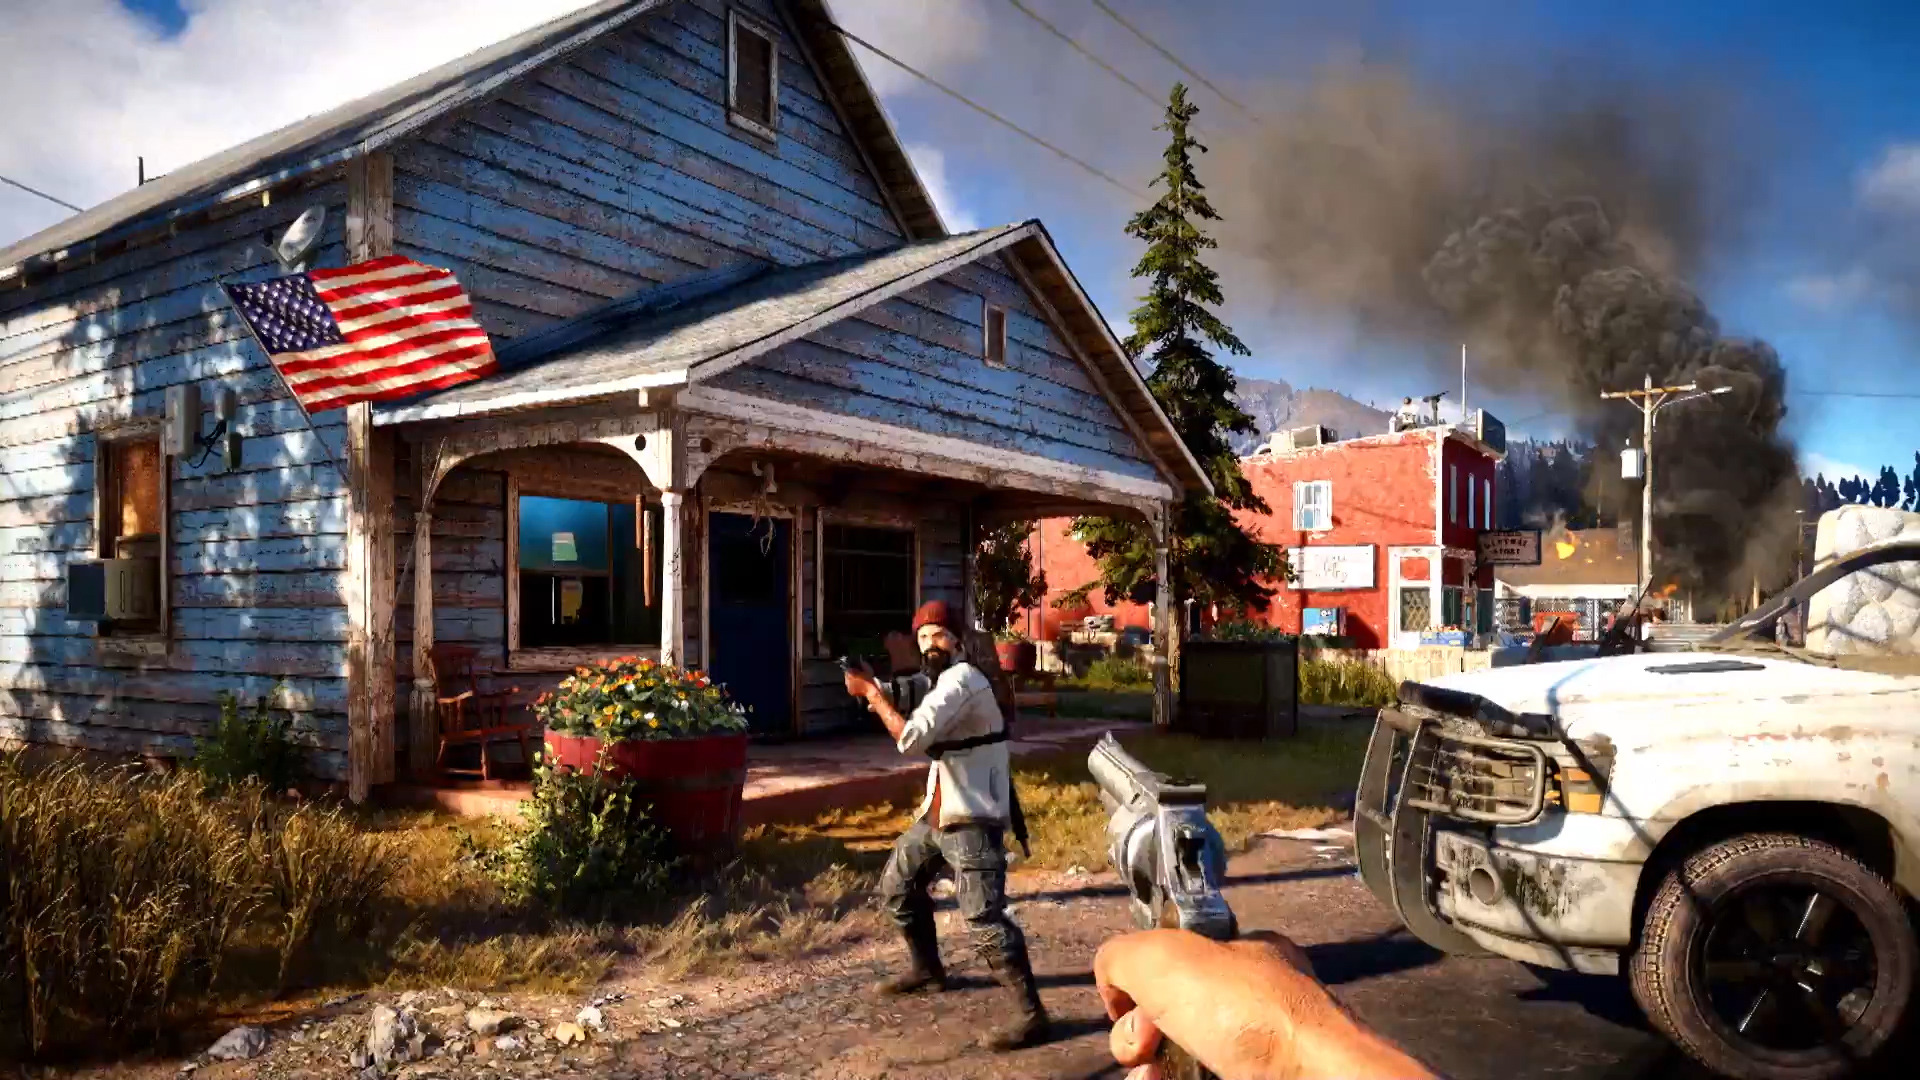 Скриншот Far Cry 5: Gold Edition Xbox One + Series ⭐?⭐